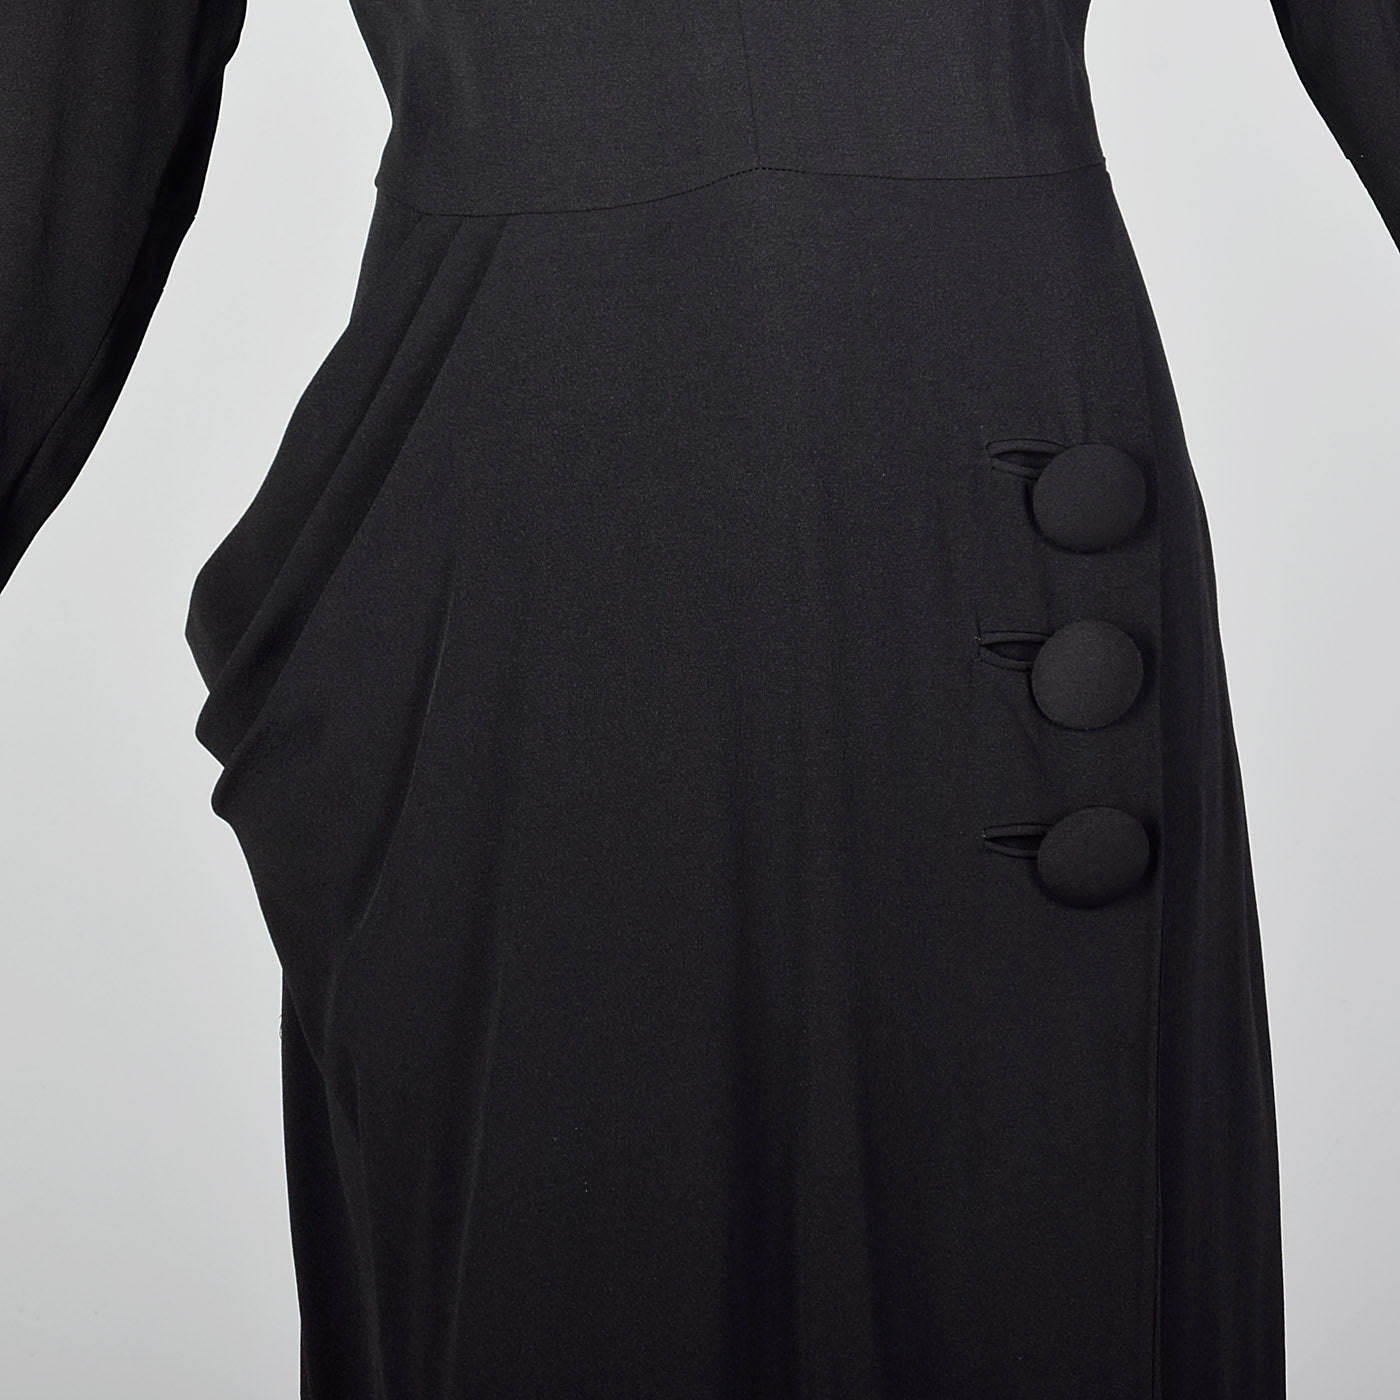 1940s Black Rayon Dress with Draped Hip Pocket